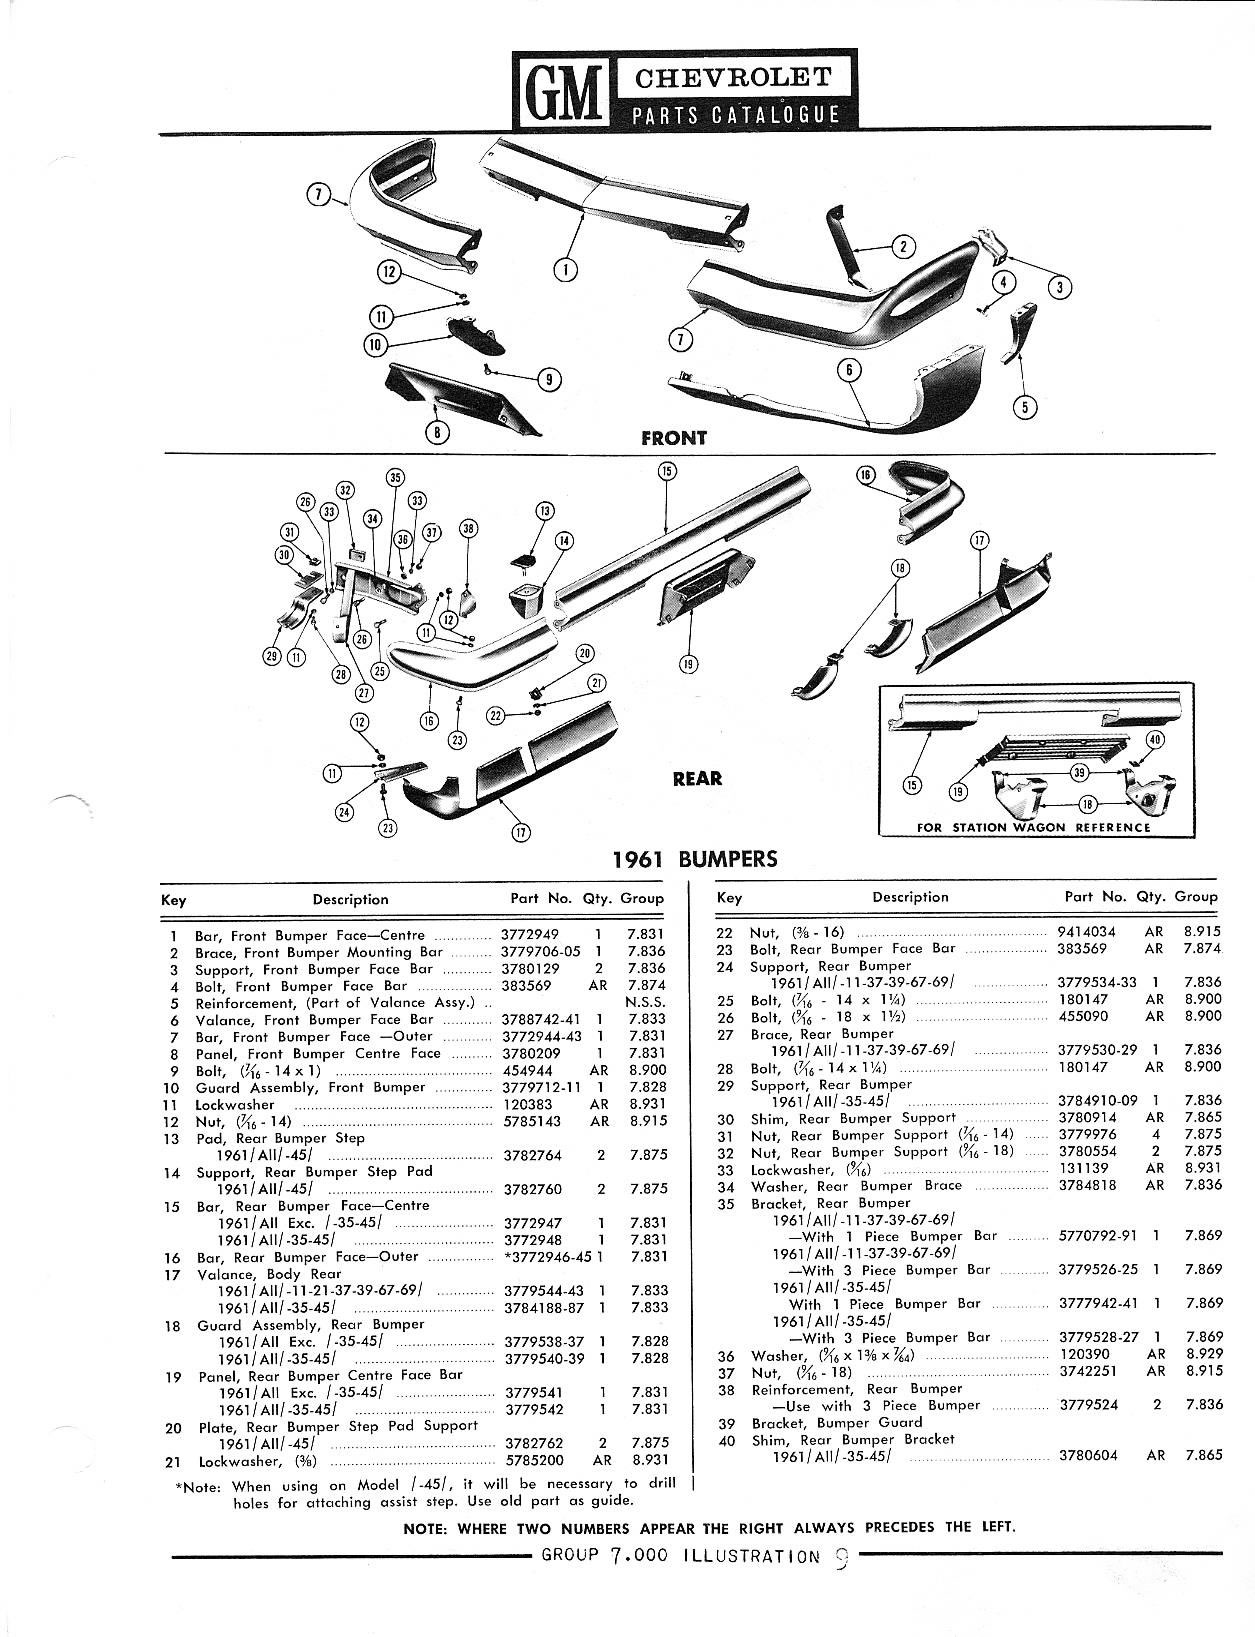 1958-1968 Chevrolet Parts Catalog / Image57.jpg